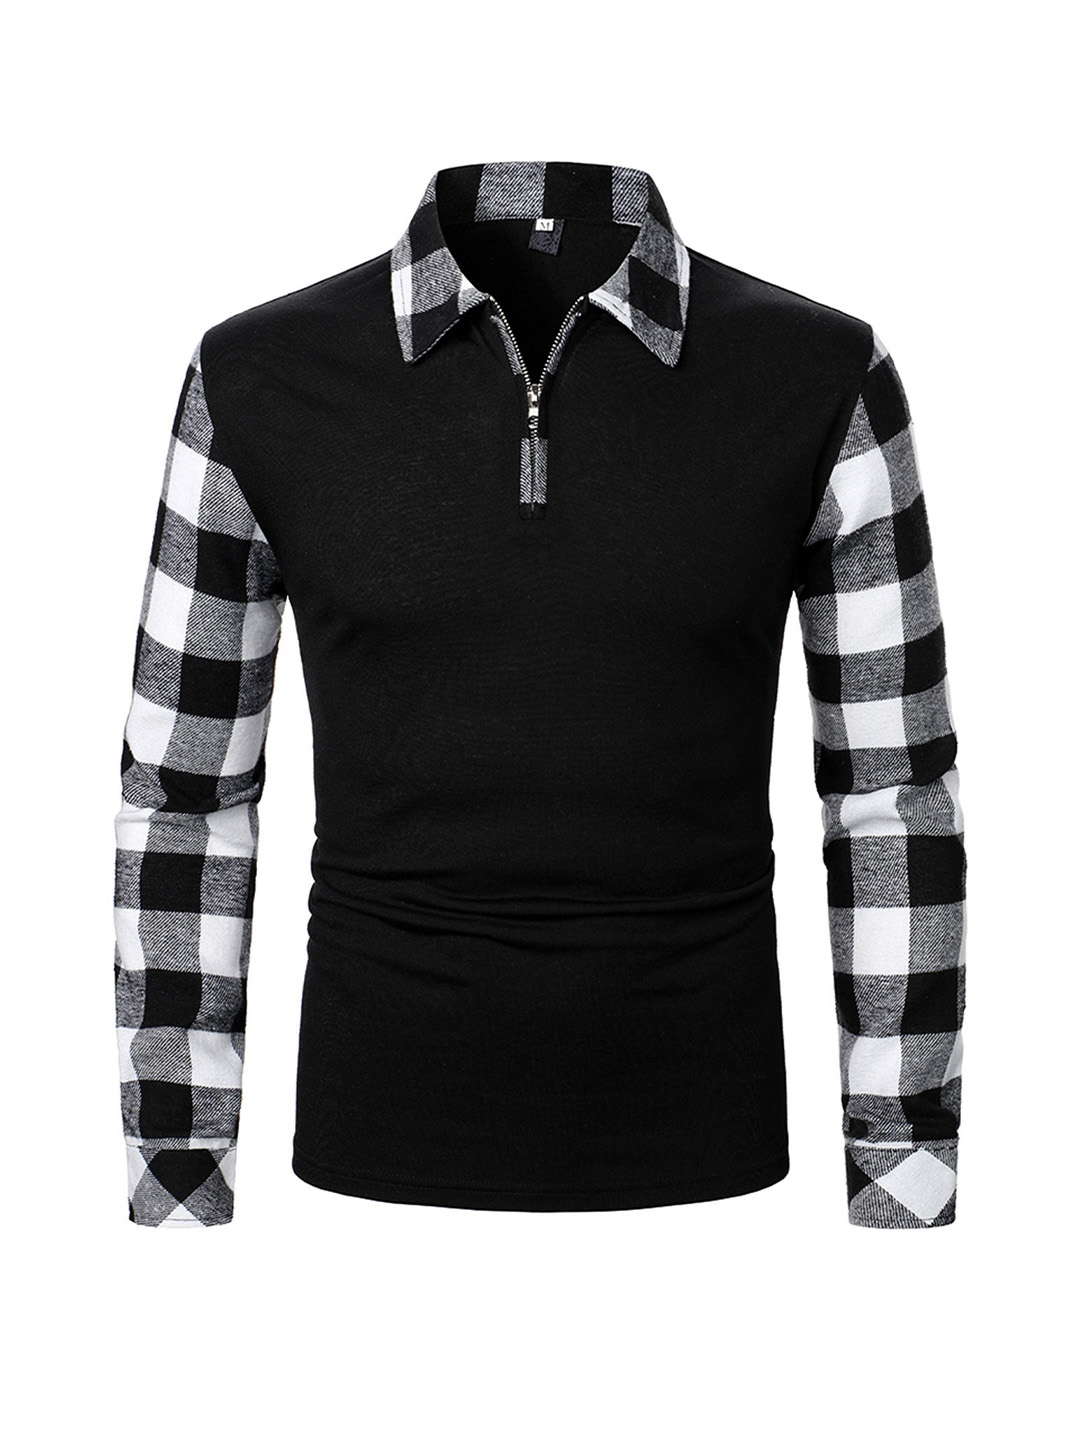 Men's Golf Shirt Plain Turndown Casual Daily Long Sleeve Tops Business Black